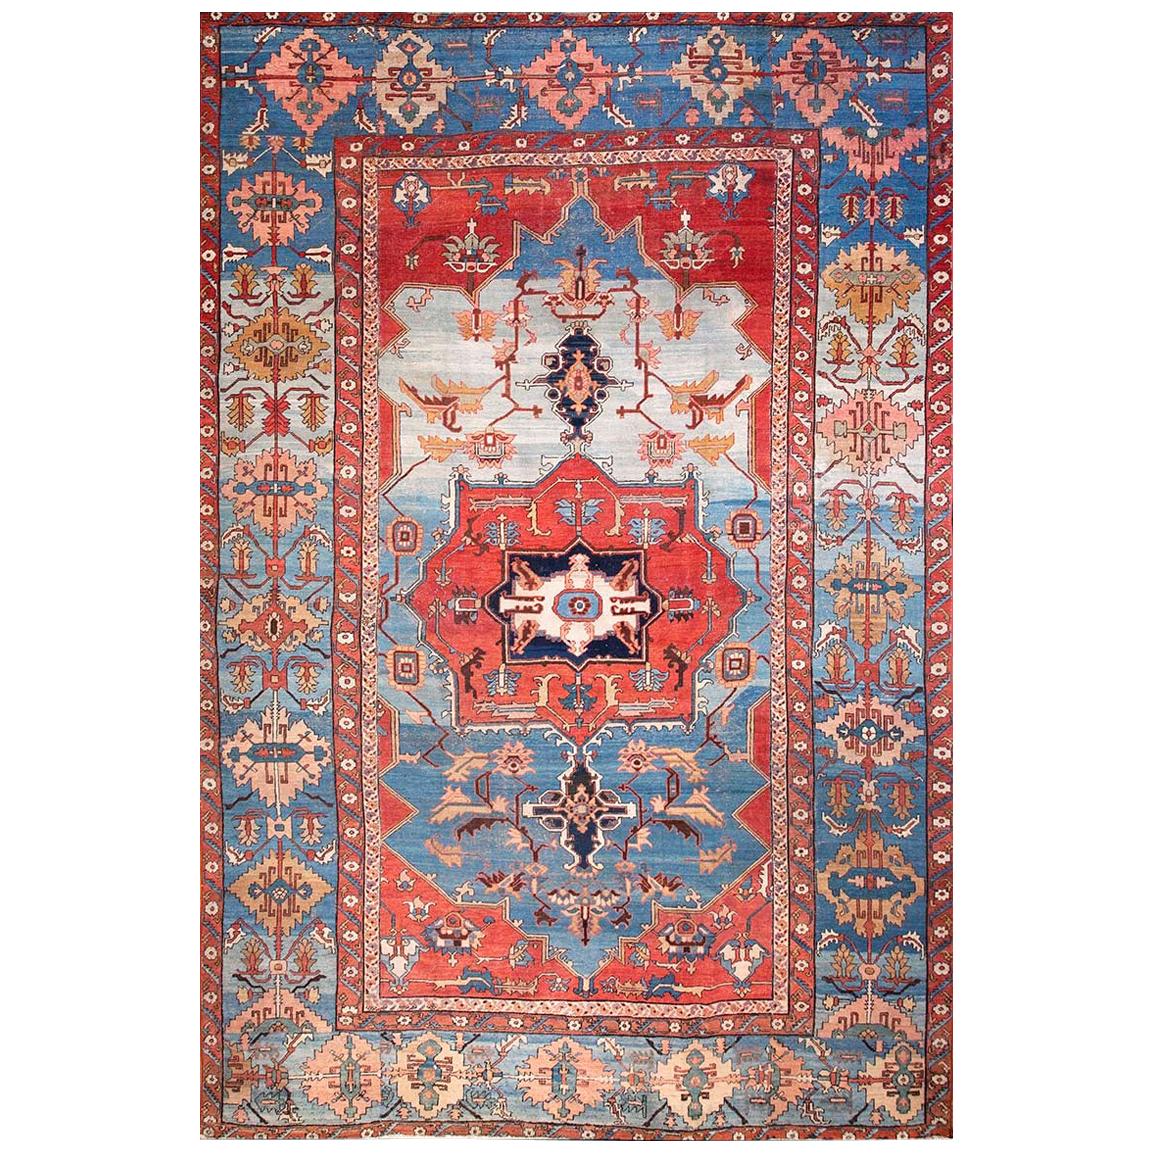 19th Century N.W. Persian Serapi Carpet ( 10'2" x 15'2" - 310 x 462 ) For Sale